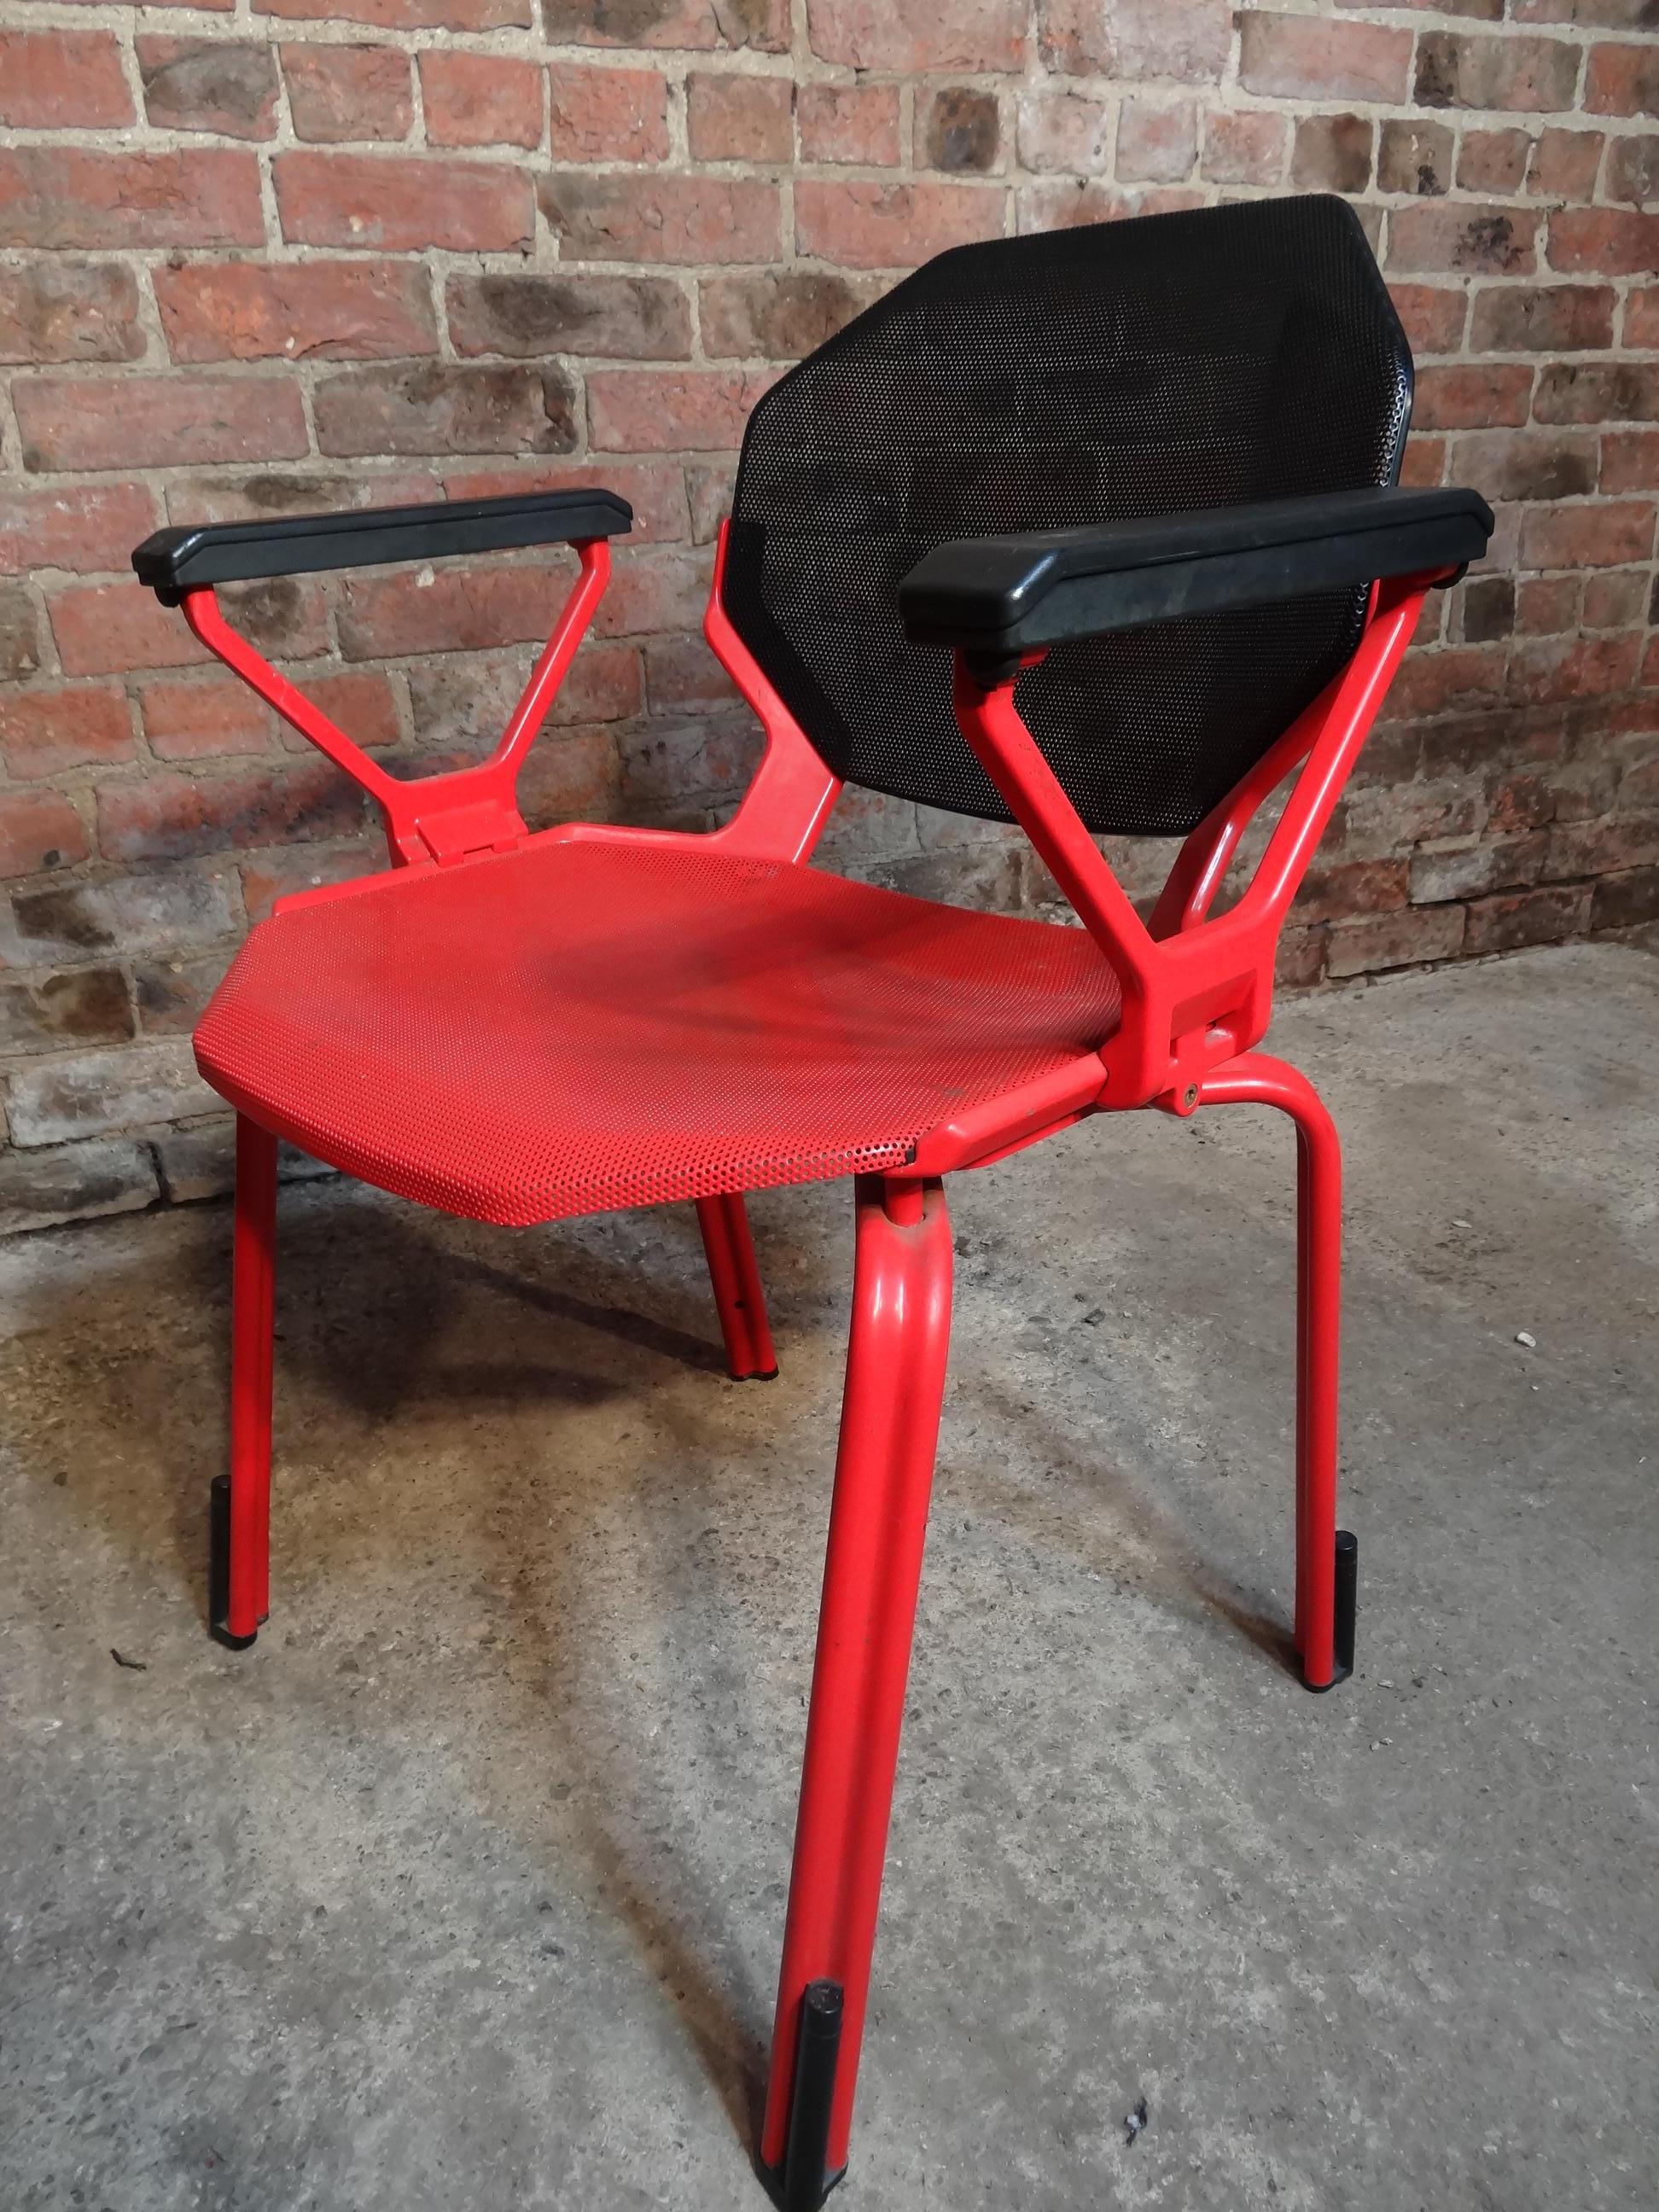 Froscher designed Retro 1970 red metal office / desk arm chair for Sitform, stunning designed by Froscher for Sitform, original designer metal chairs, the chairs are in very good vintage condition.

Le prix de la livraison s'entend par chaise.